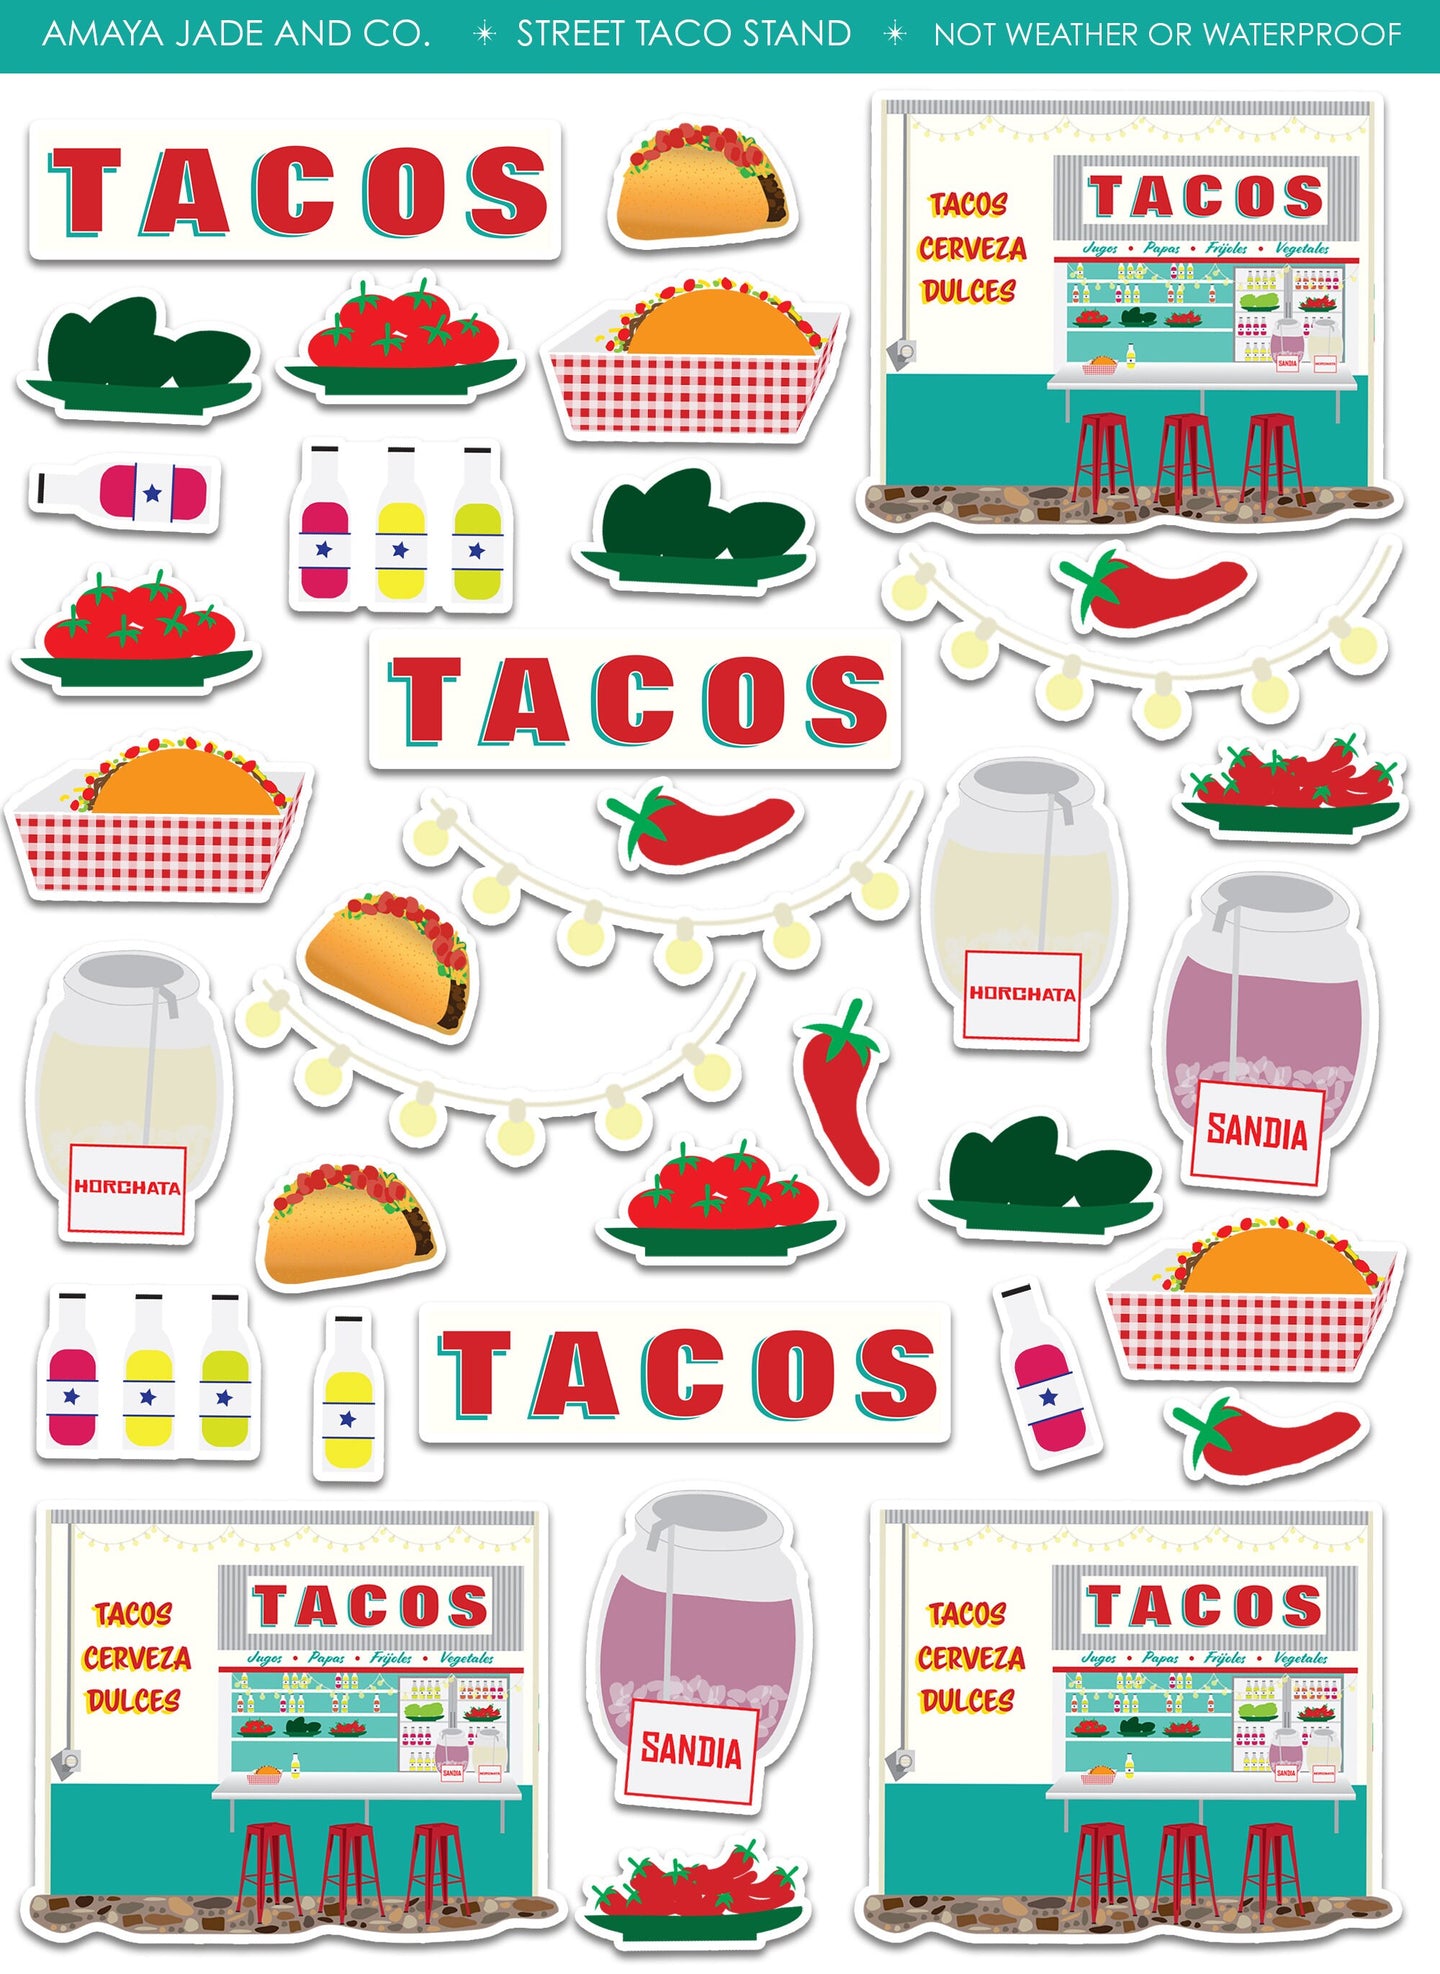 Street Taco Stand Art Sticker Set